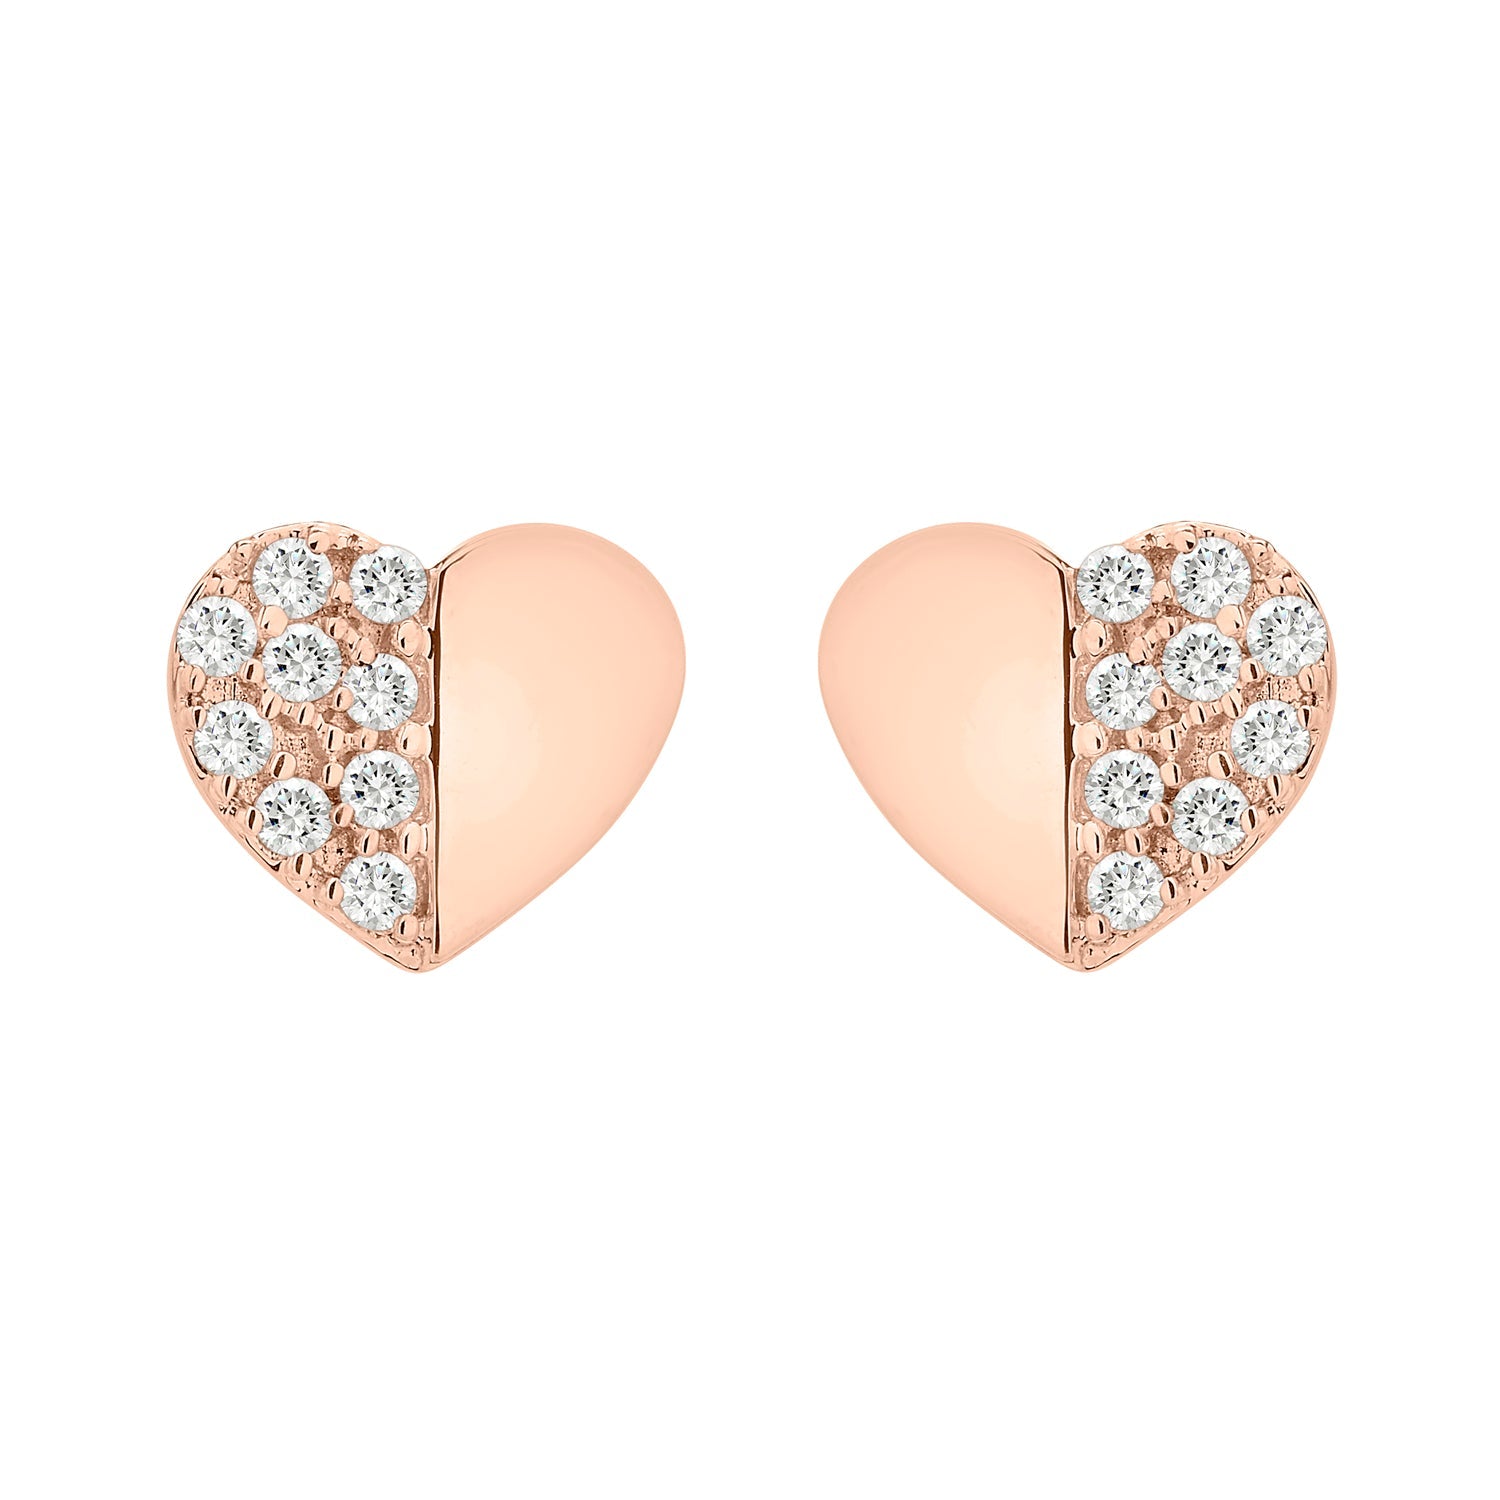 Encanta Gold and Diamond Heart Earrings In Rose Gold